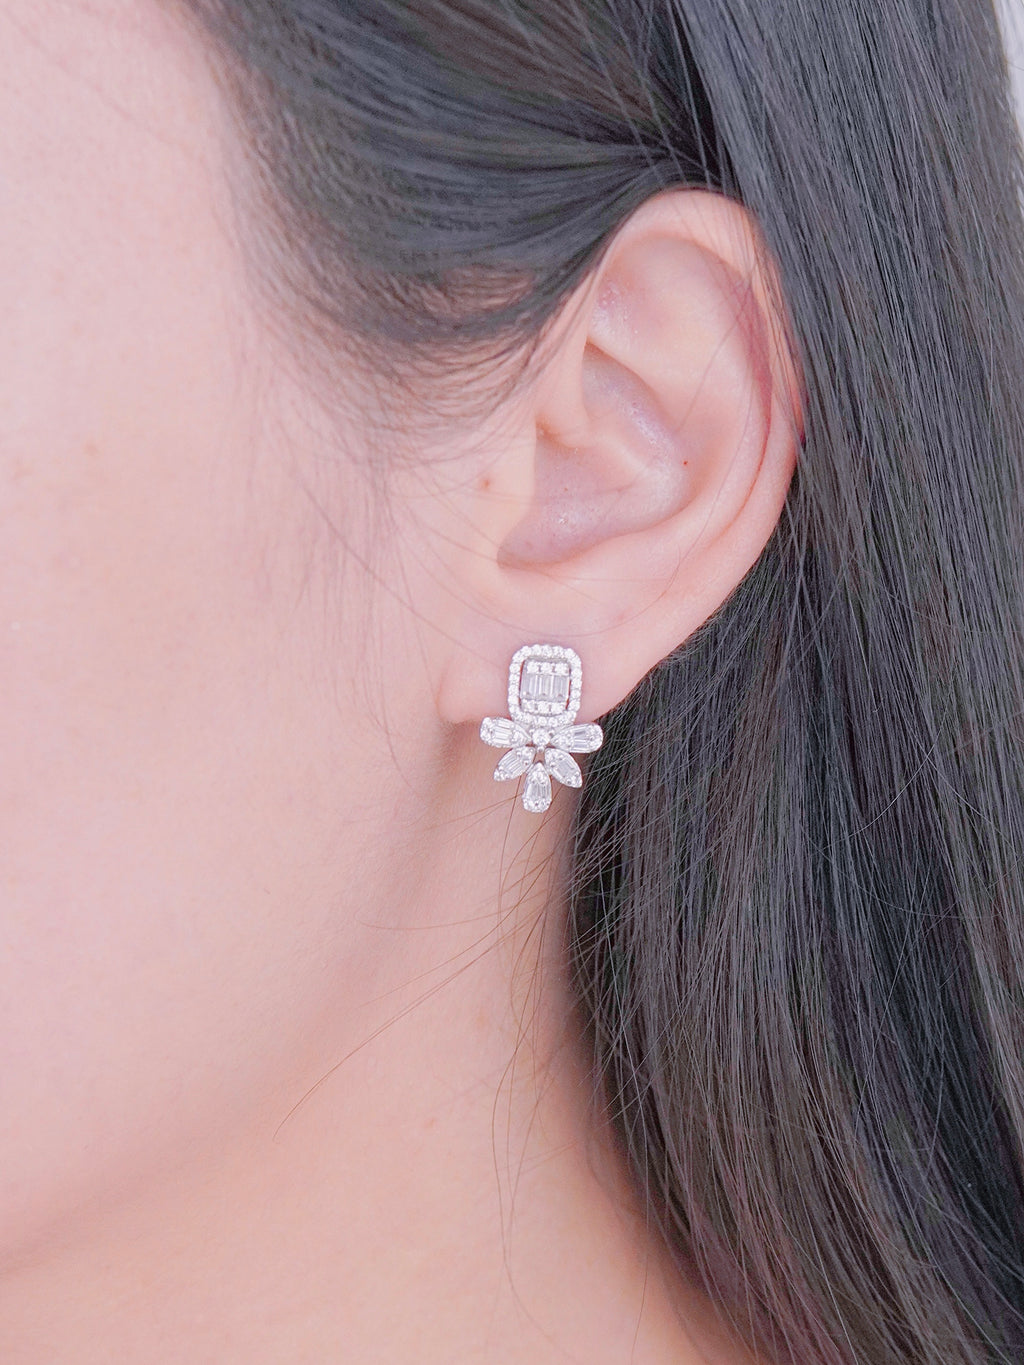 LAFIT· Floral Fairy - Earrings  花中精靈高碳鑽耳環